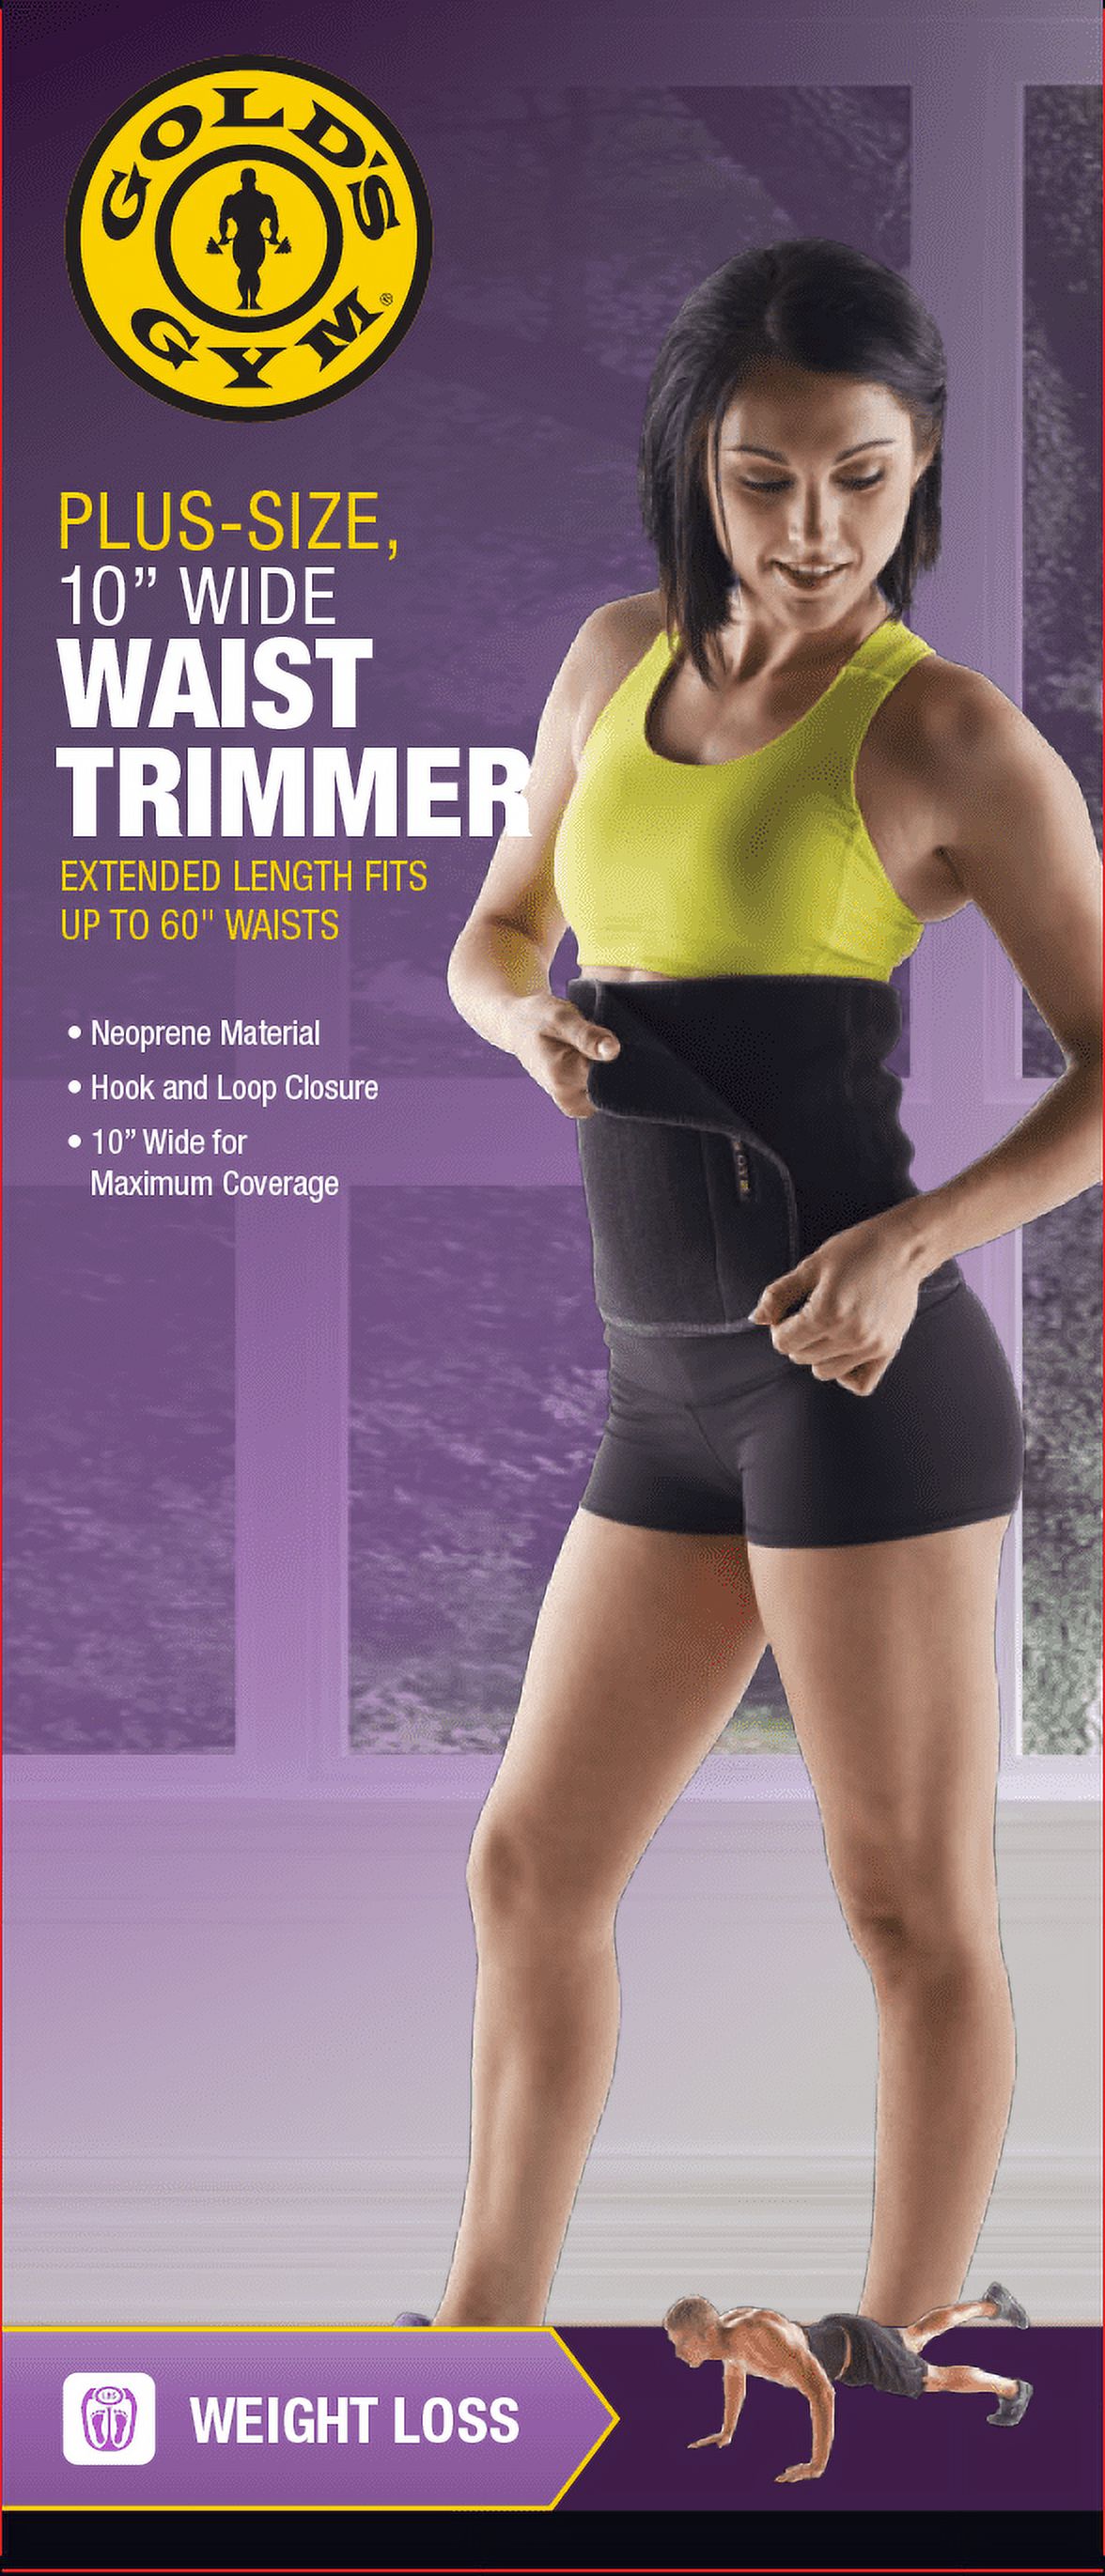 Gold's Gym Plus Size, 10" Wide Waist Trimmer, Waist Trainer - image 5 of 6